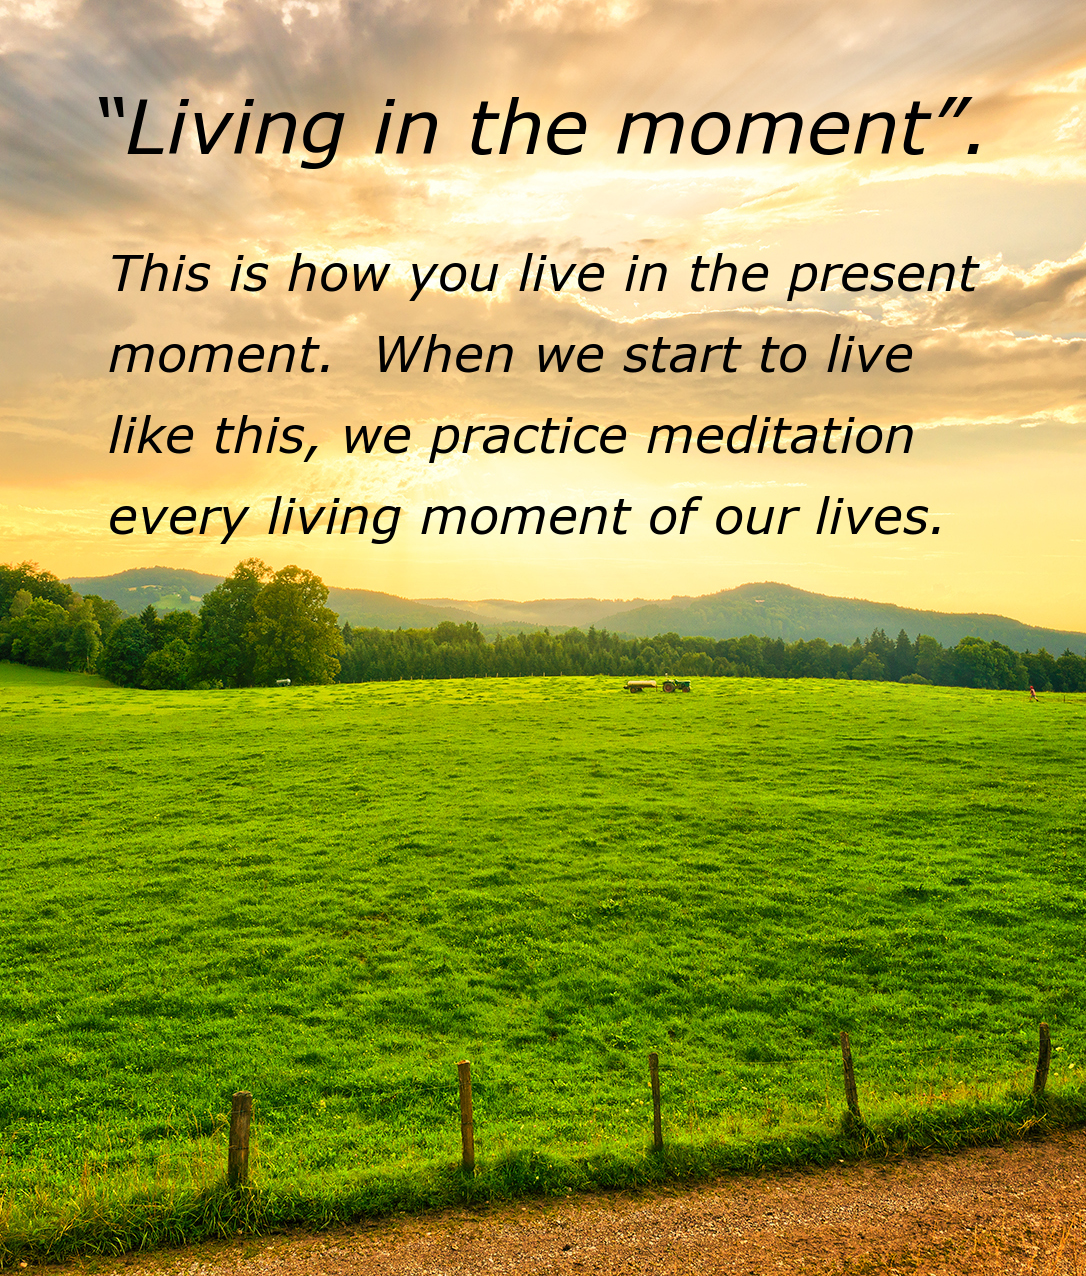 http://www.promotehealthwellness.com/wp-content/uploads/2012/07/Benefits-of-meditation1.jpg